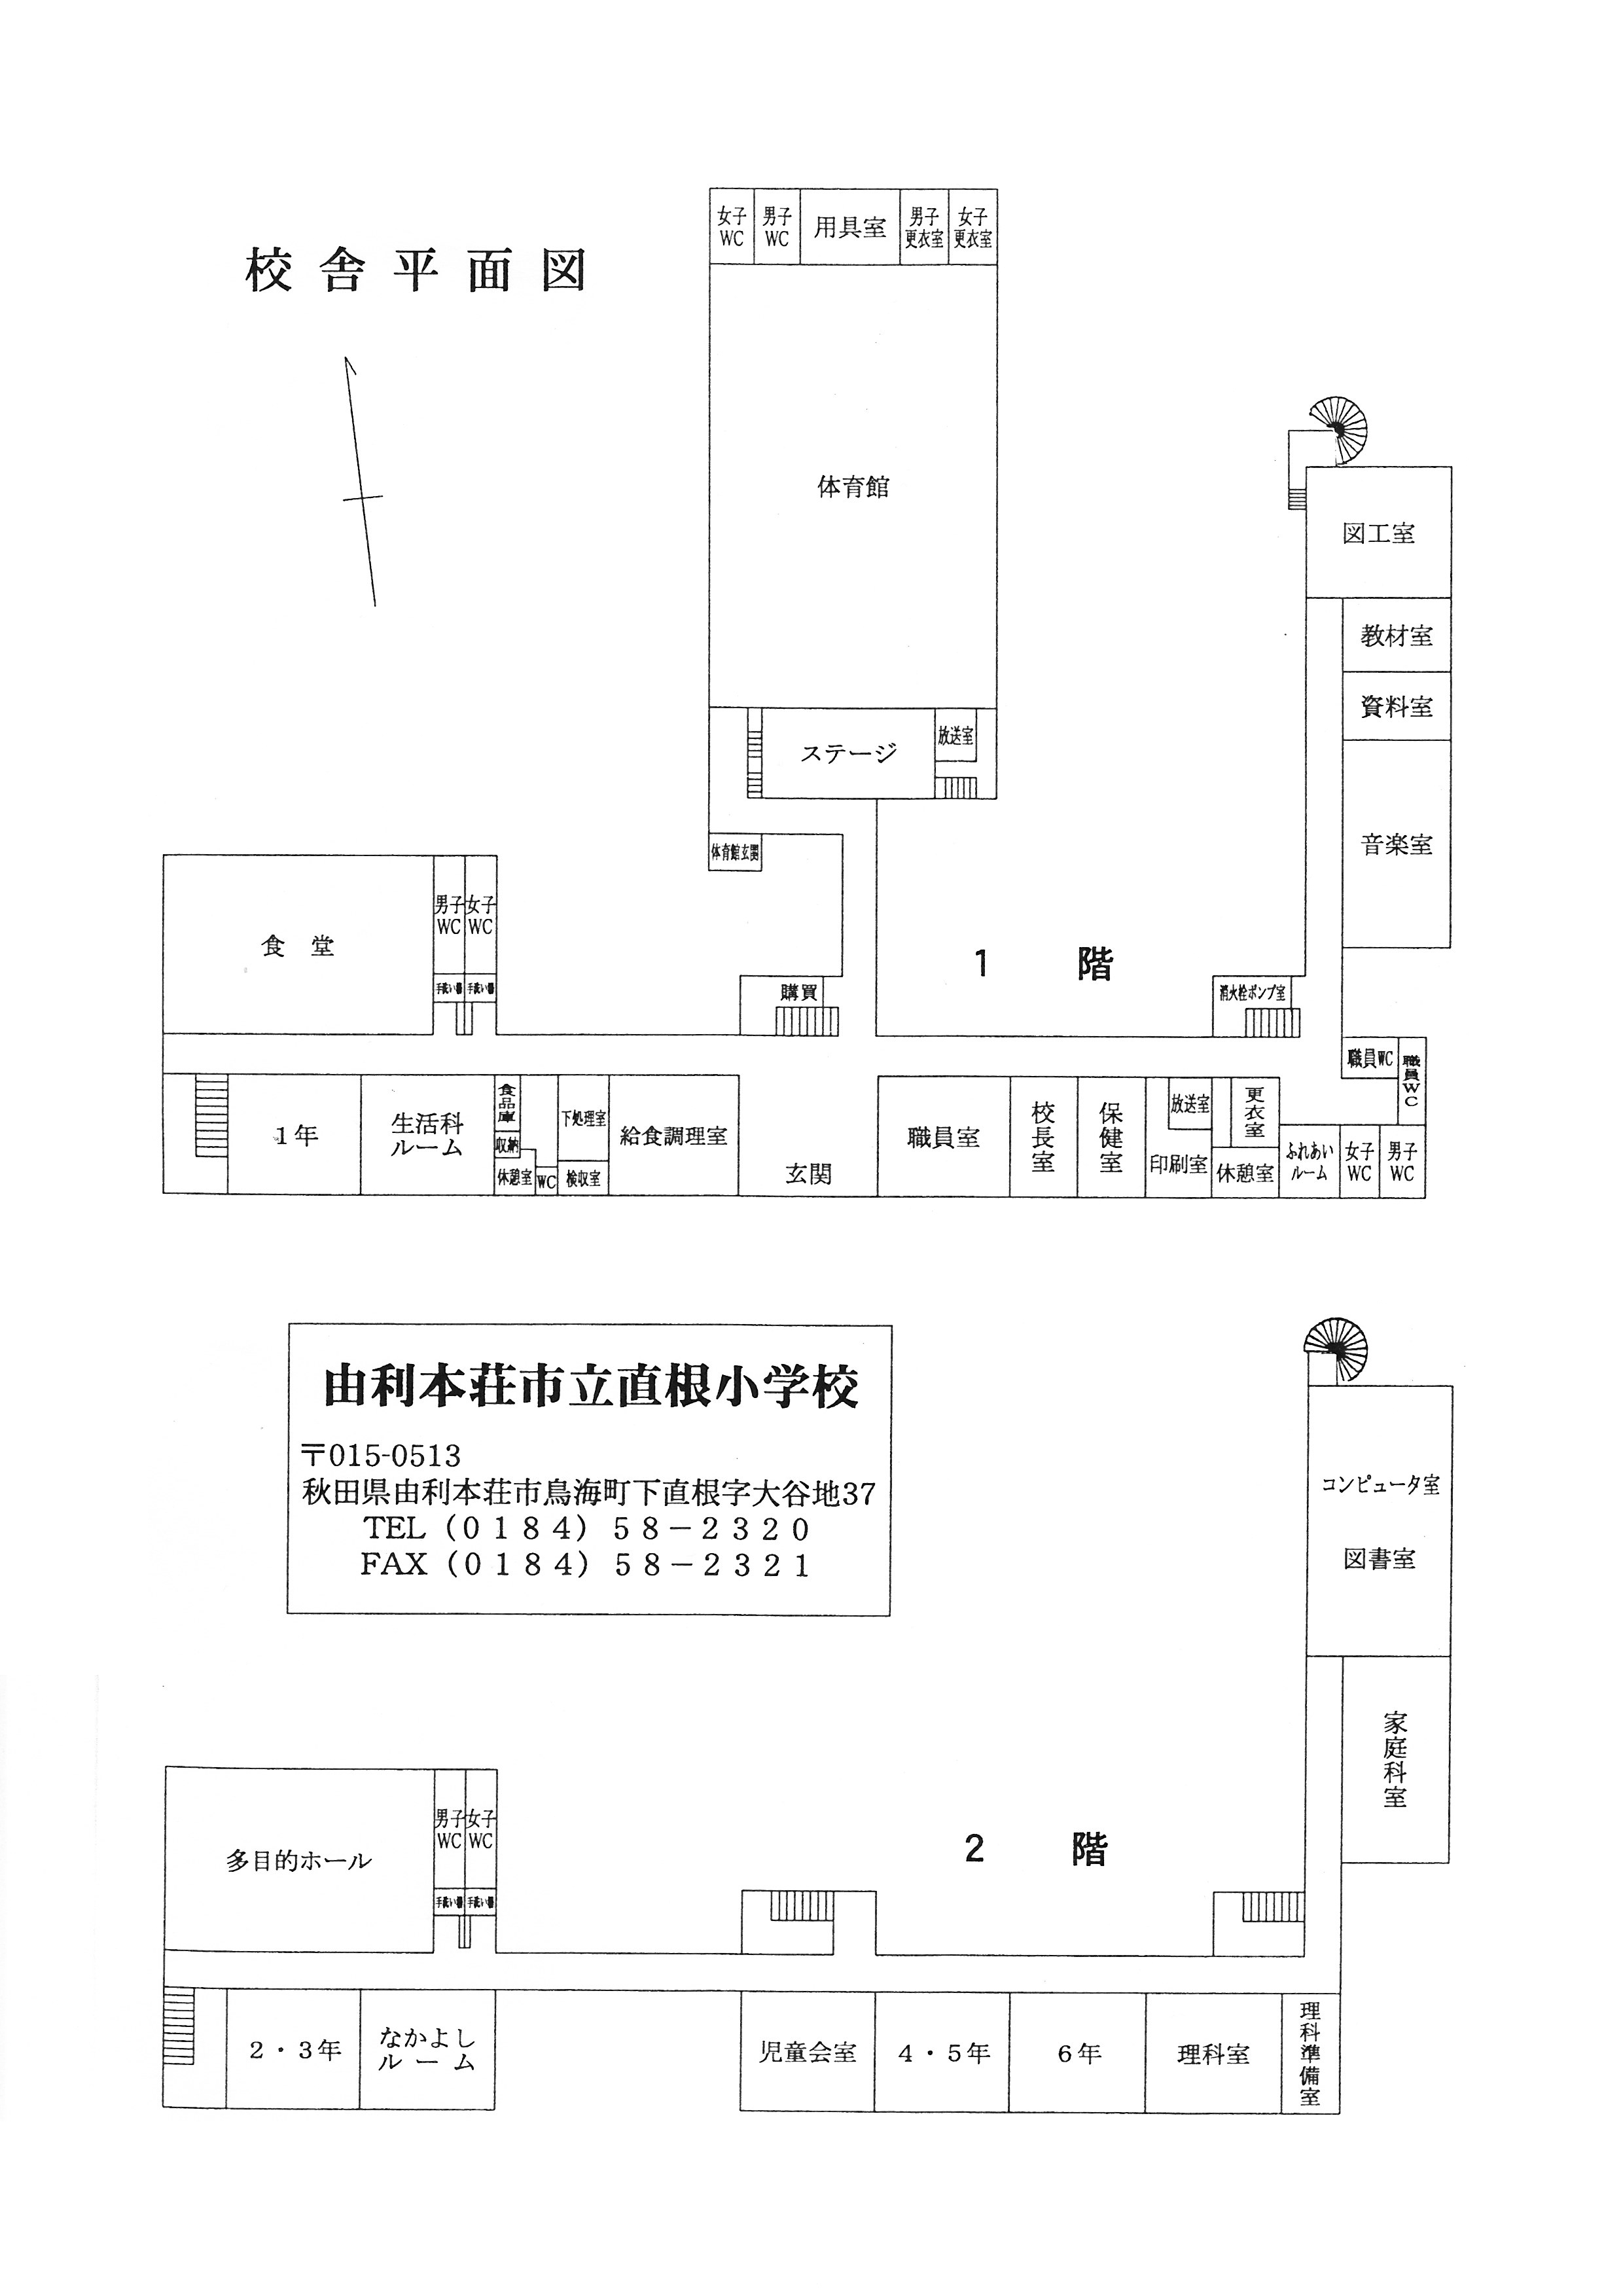 Chokai/Hitane_ES_Map.jpg